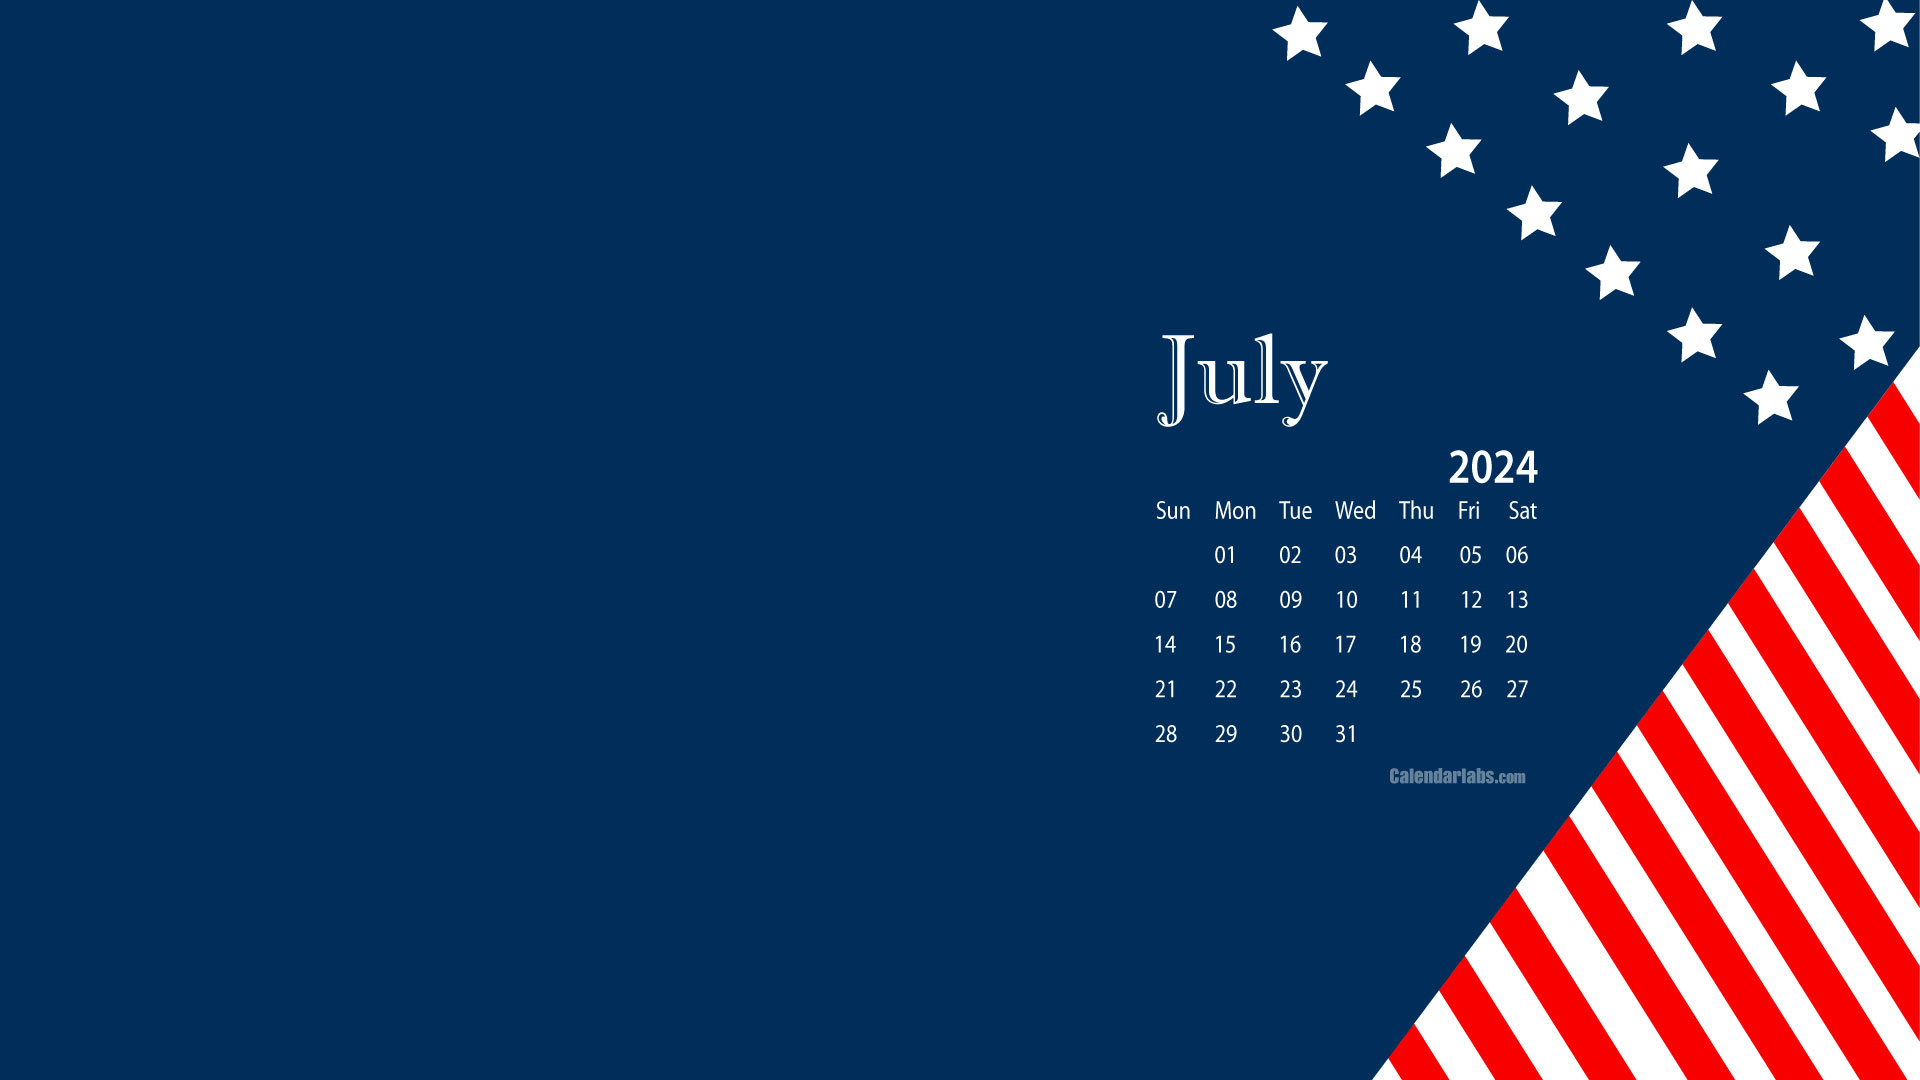 July 2024 Desktop Wallpaper Calendar - Calendarlabs with regard to July 2024 Calendar Desktop